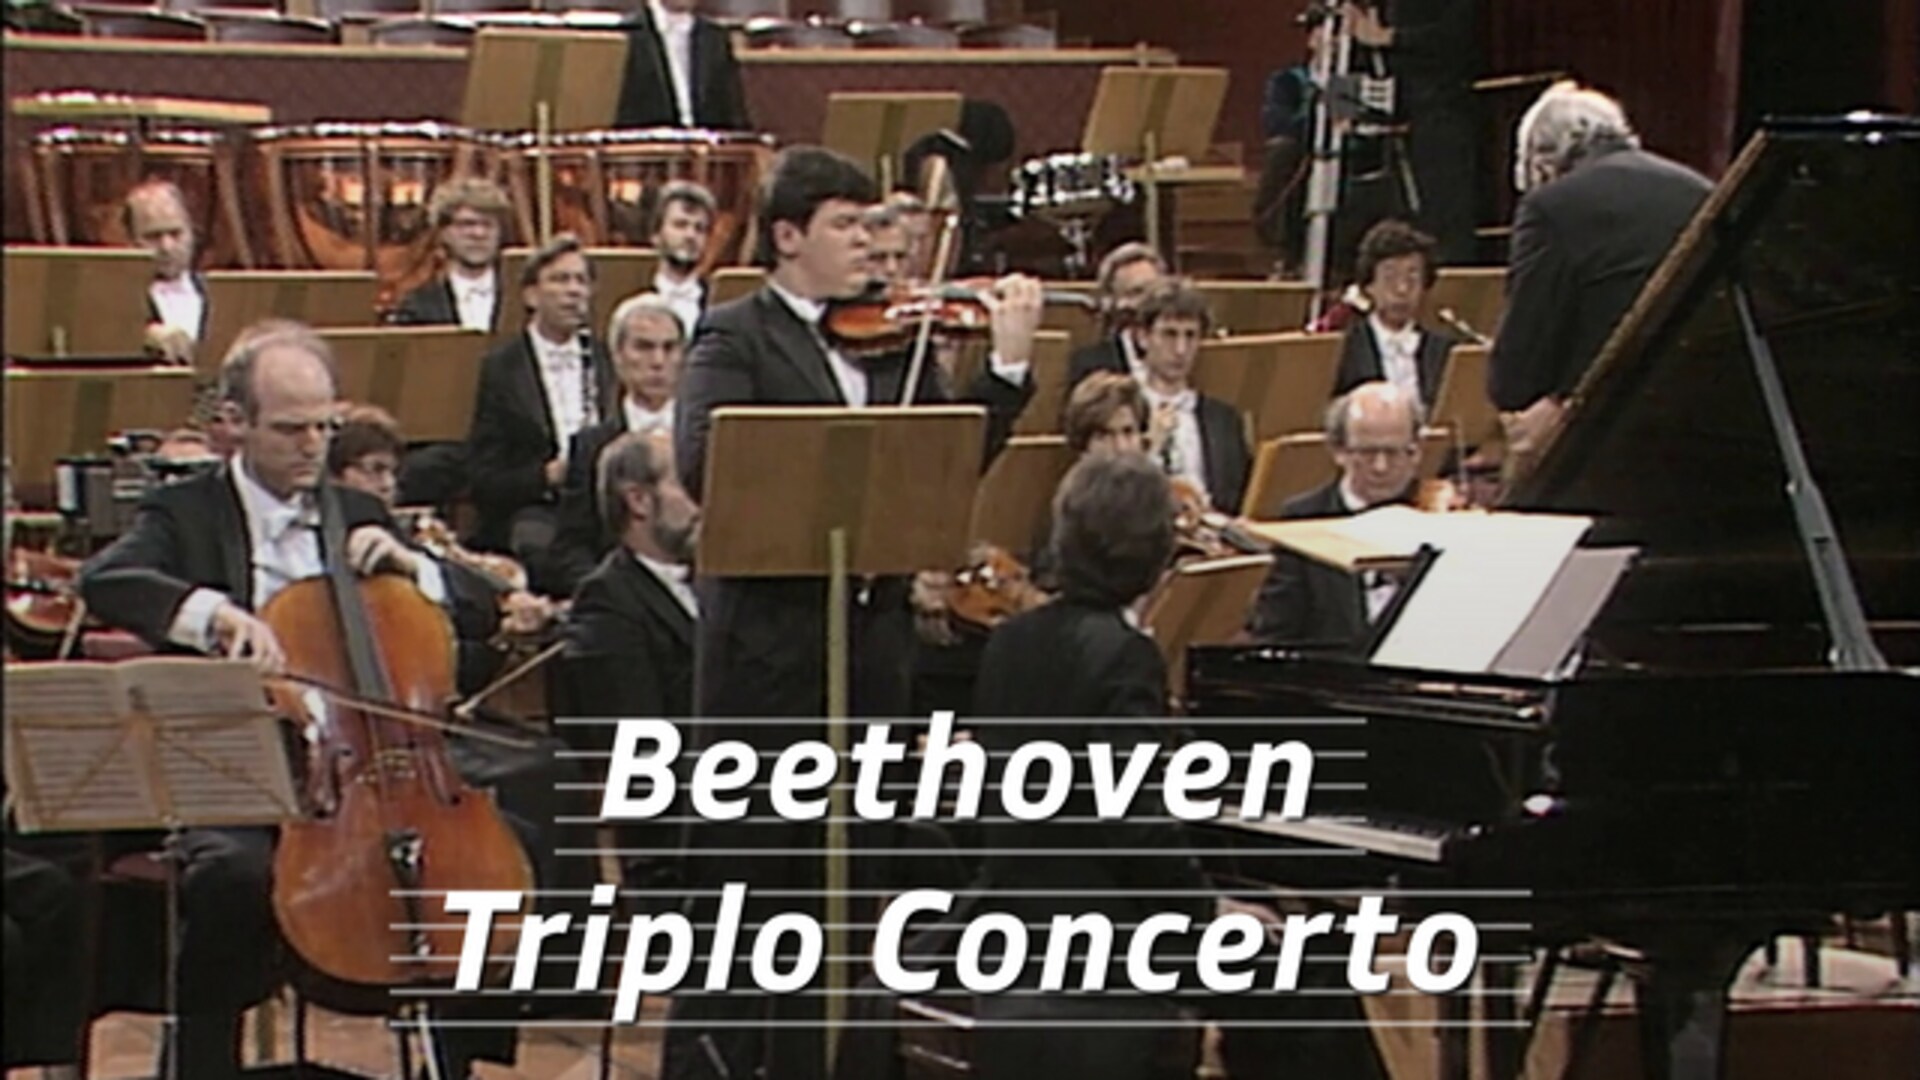 Beethoven - Triplo Concerto